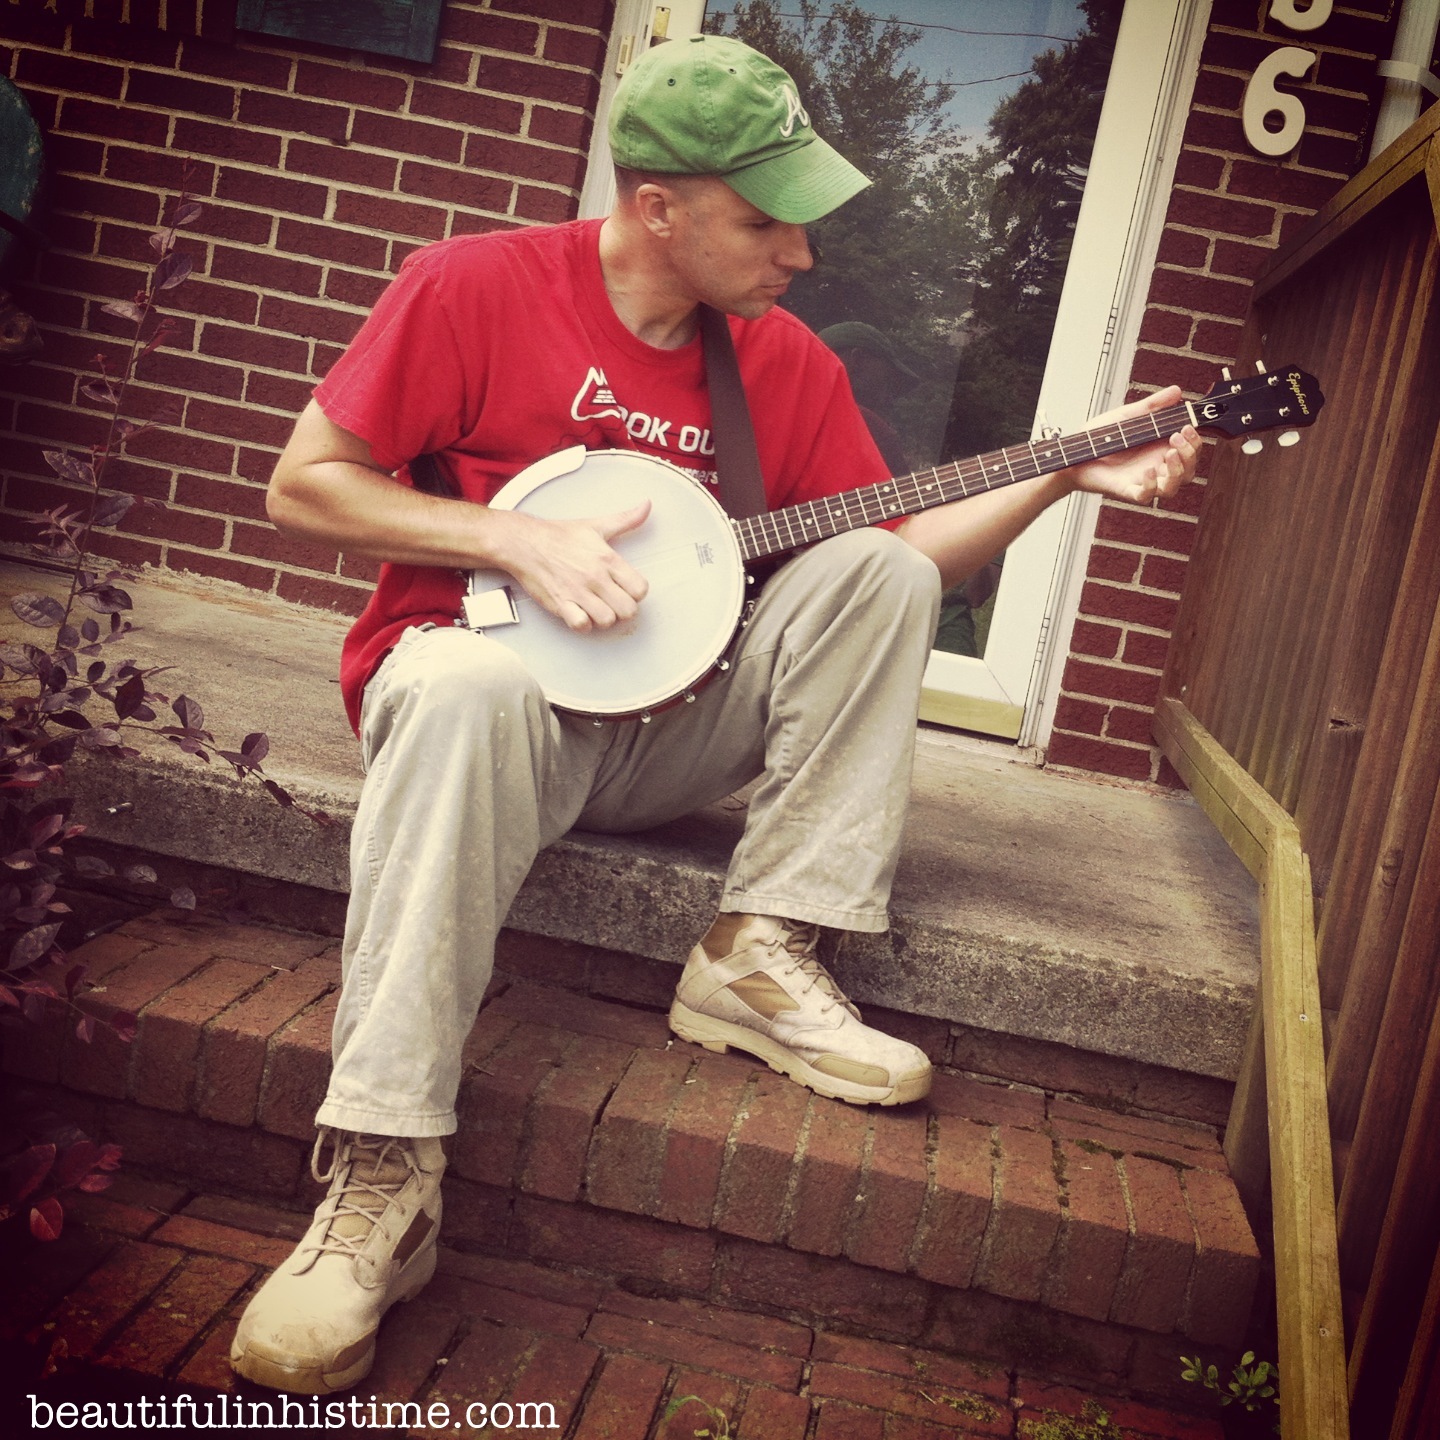 Banjo playin man Beauty in the Mess Edition 07.09.13 @beautifulinhistime.com